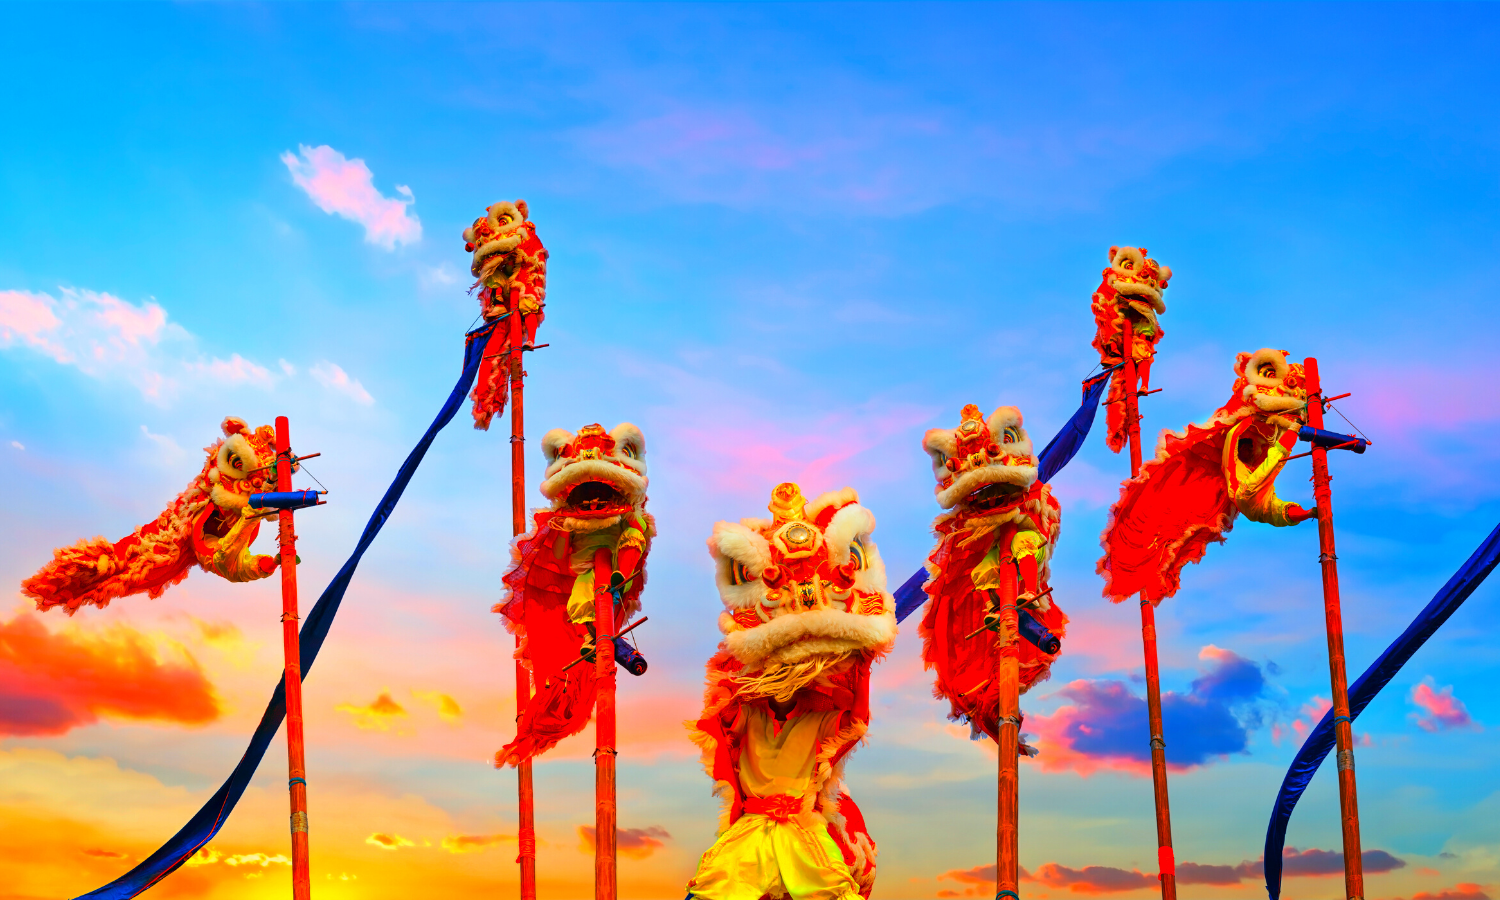 Chinese dragon head figures dancing